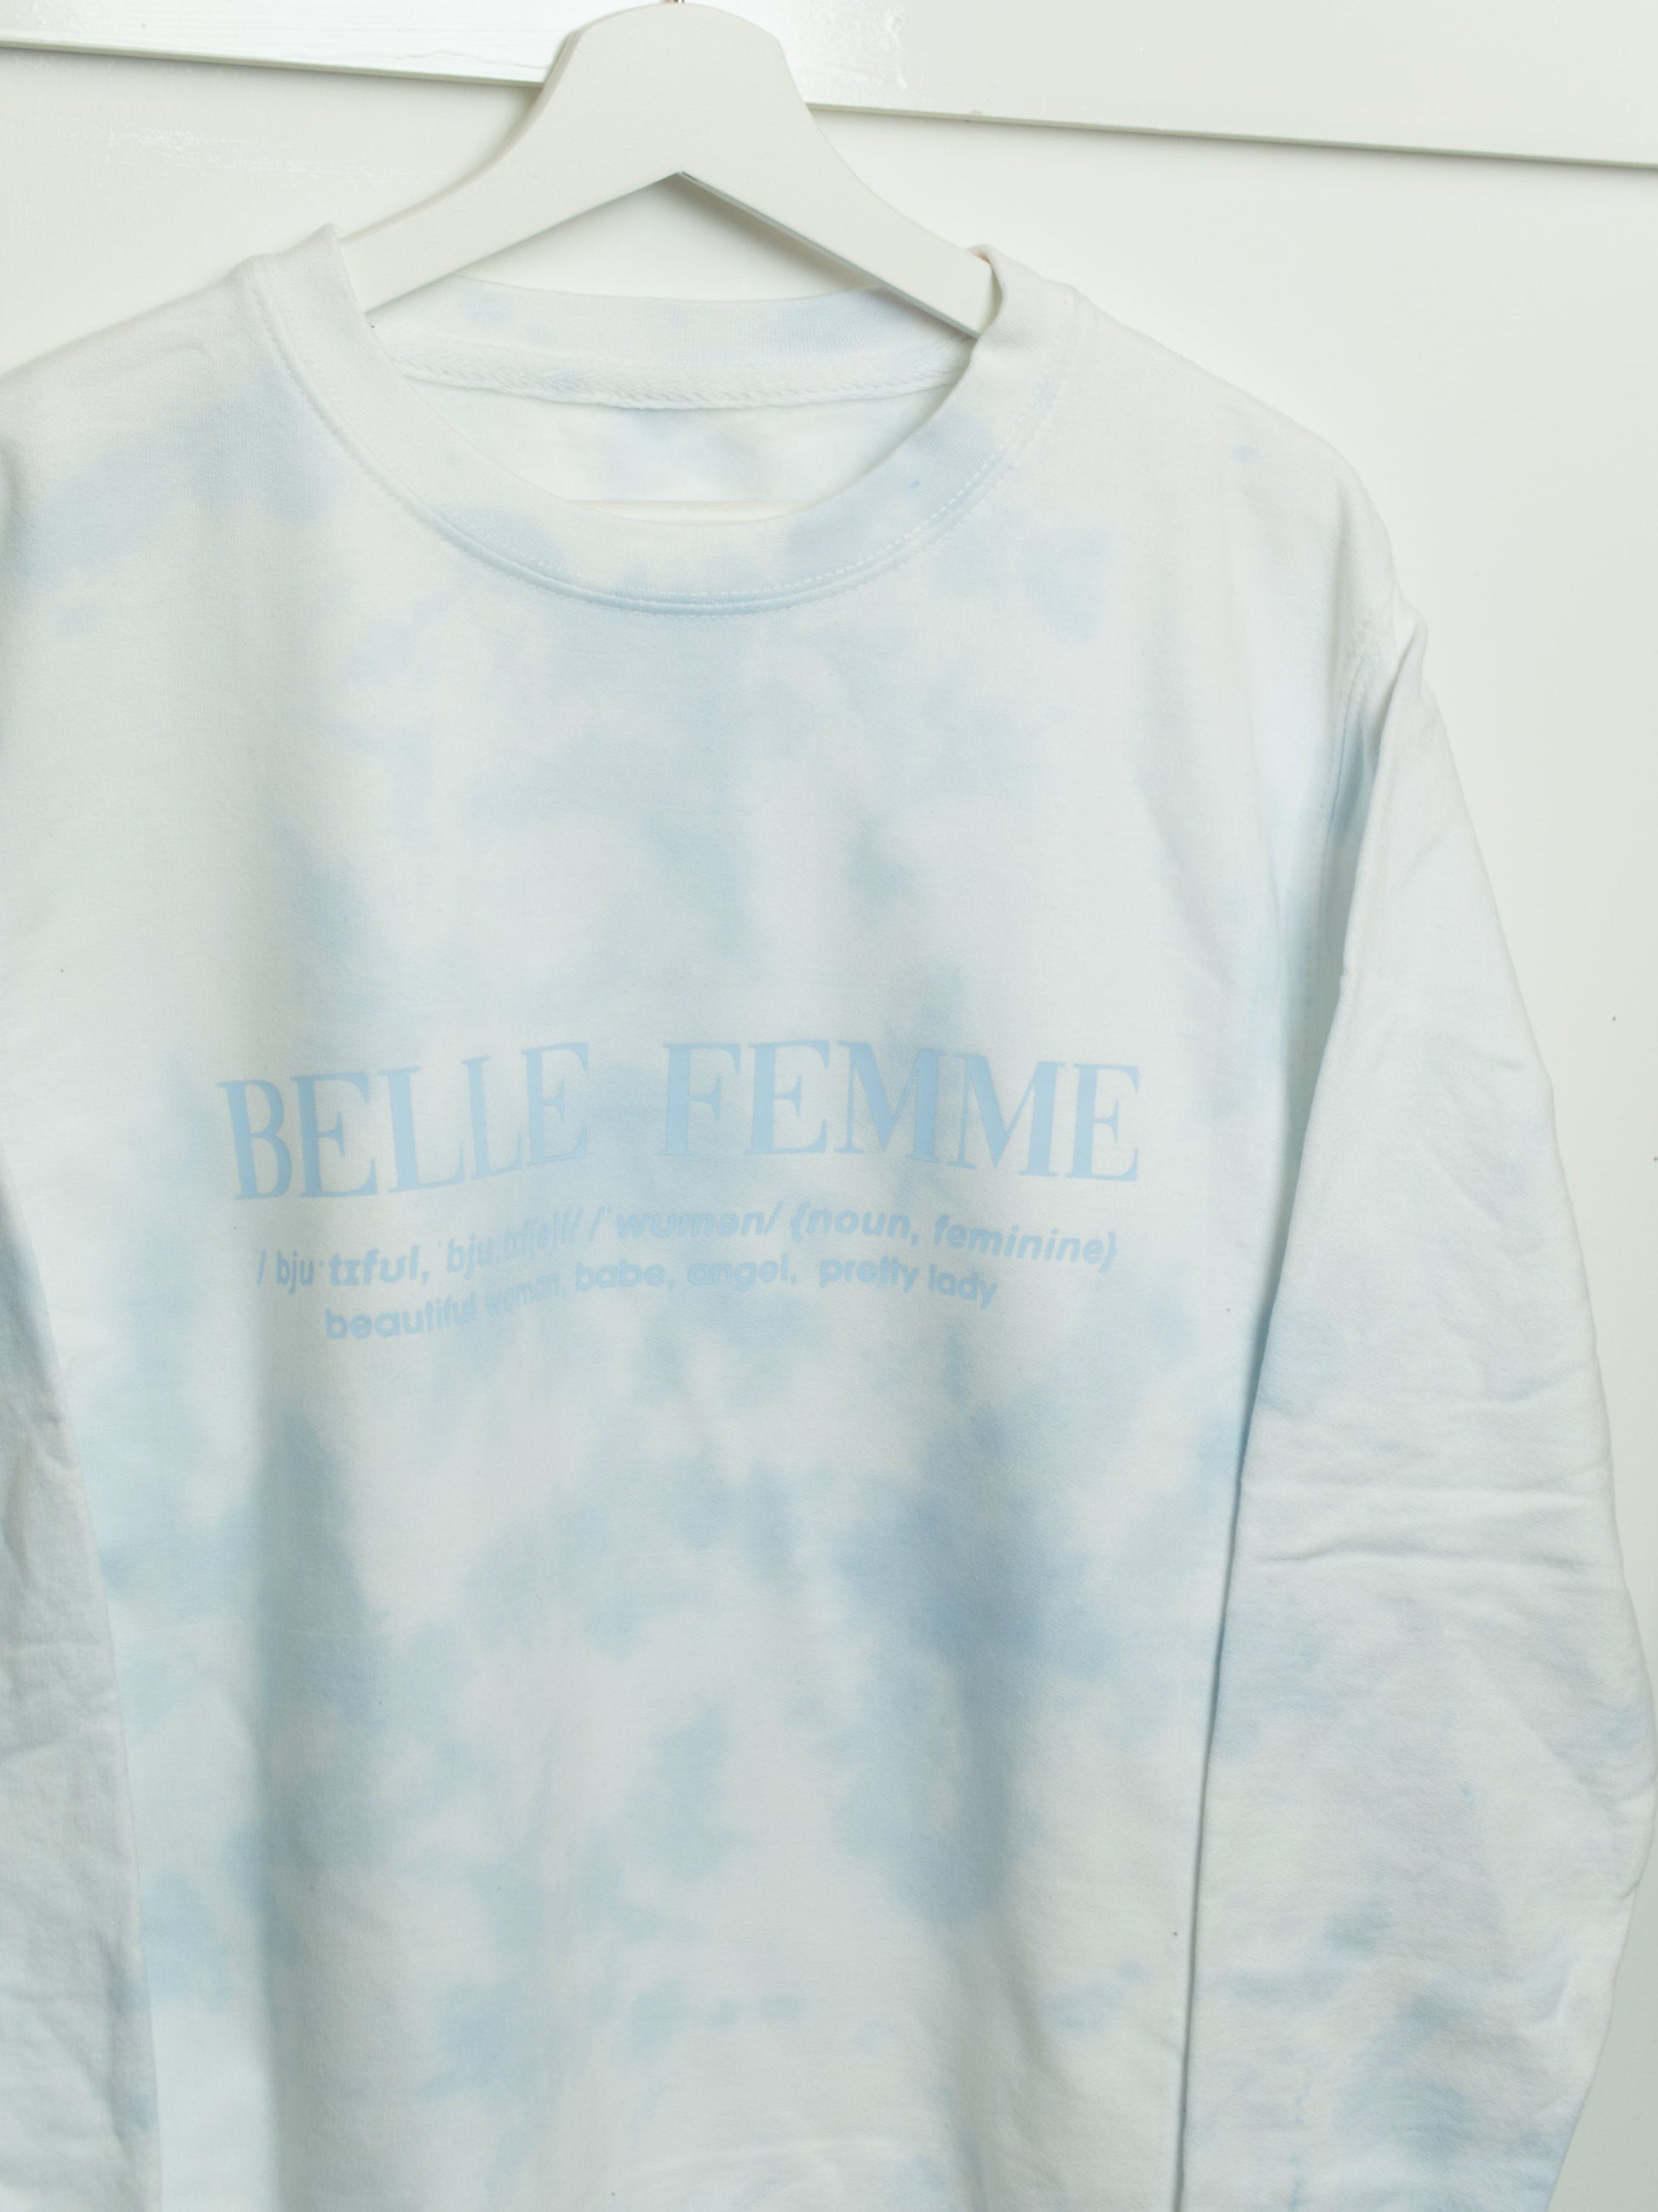 SALE Belle Femme Tie-Dye Sweatshirt (47) Clothing Out The Purse UK M baby blue 